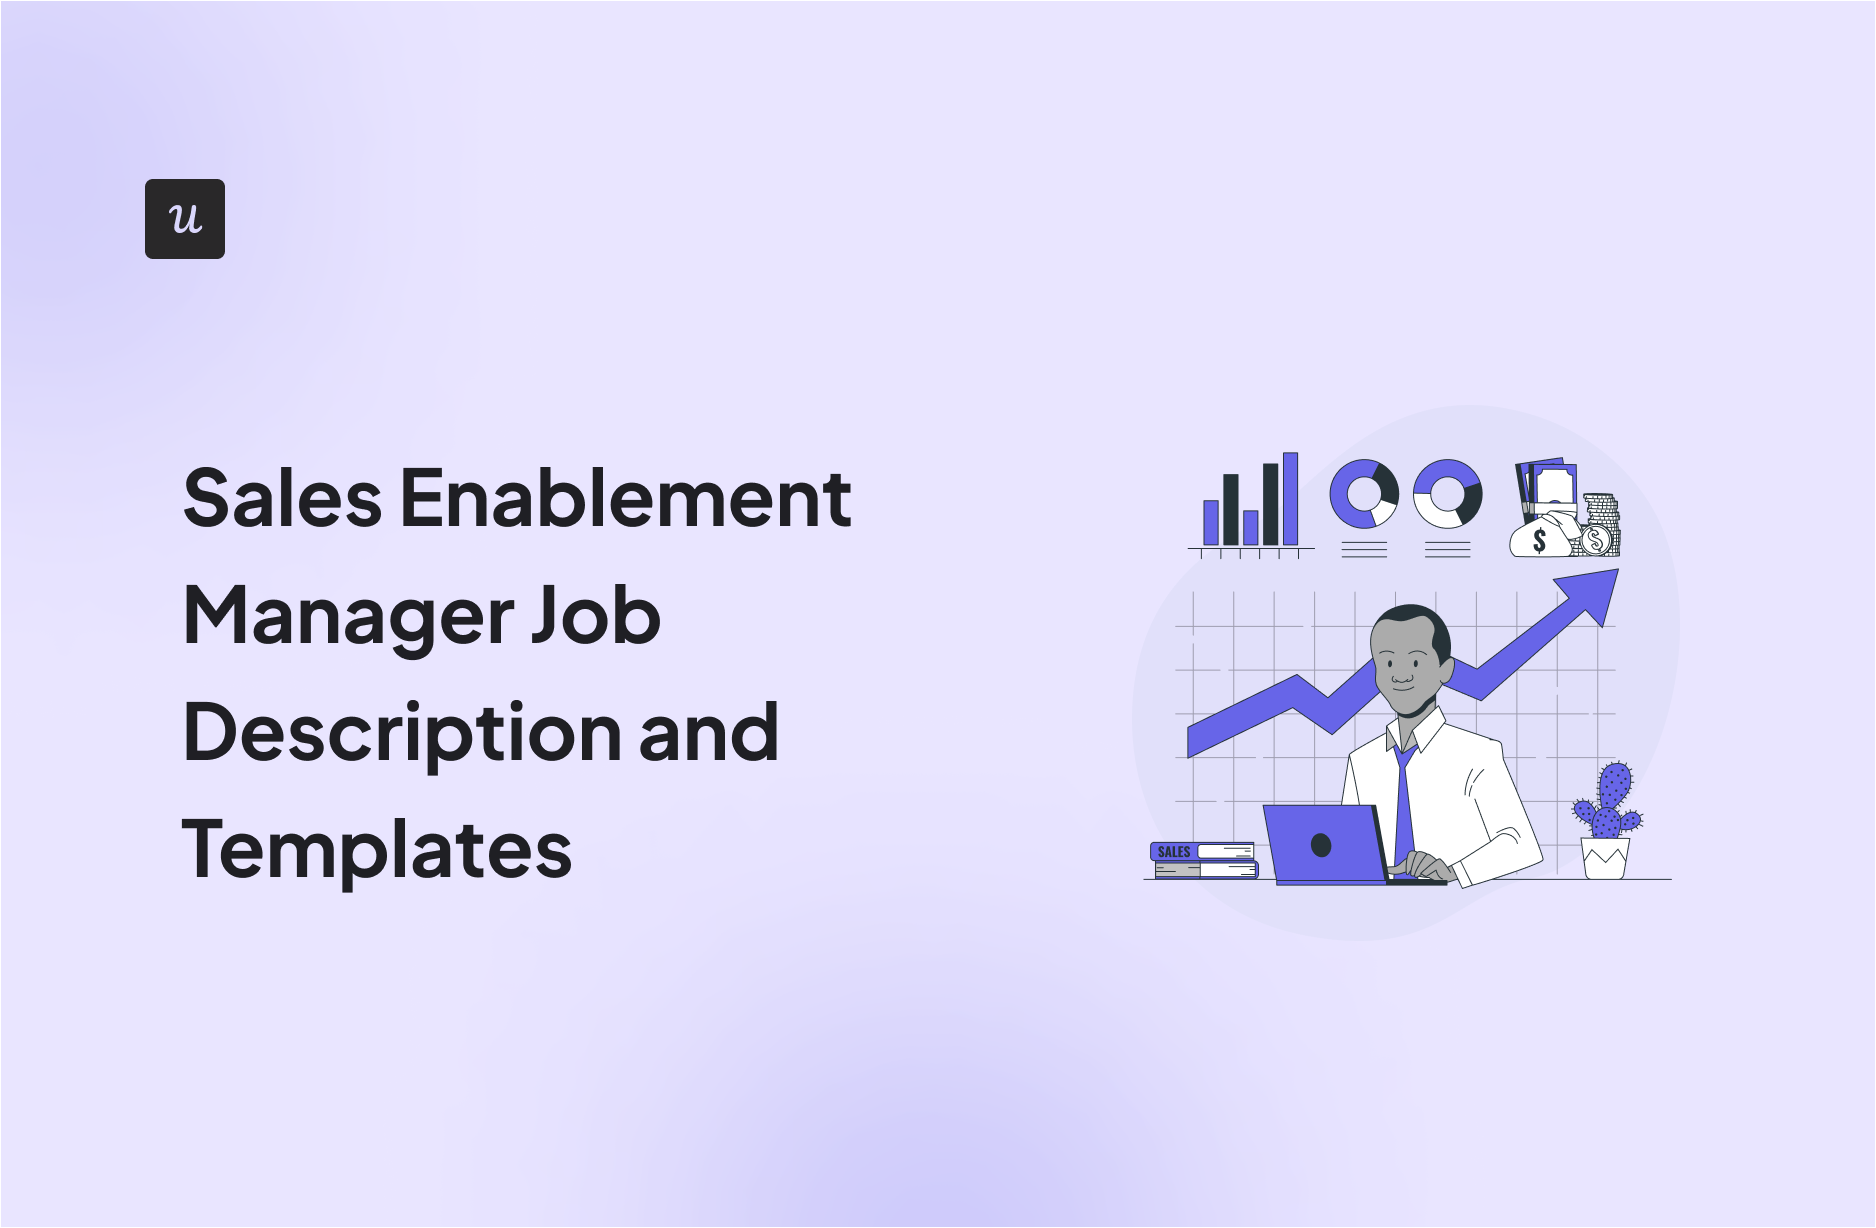 Sales Enablement Manager Job Description and Templates